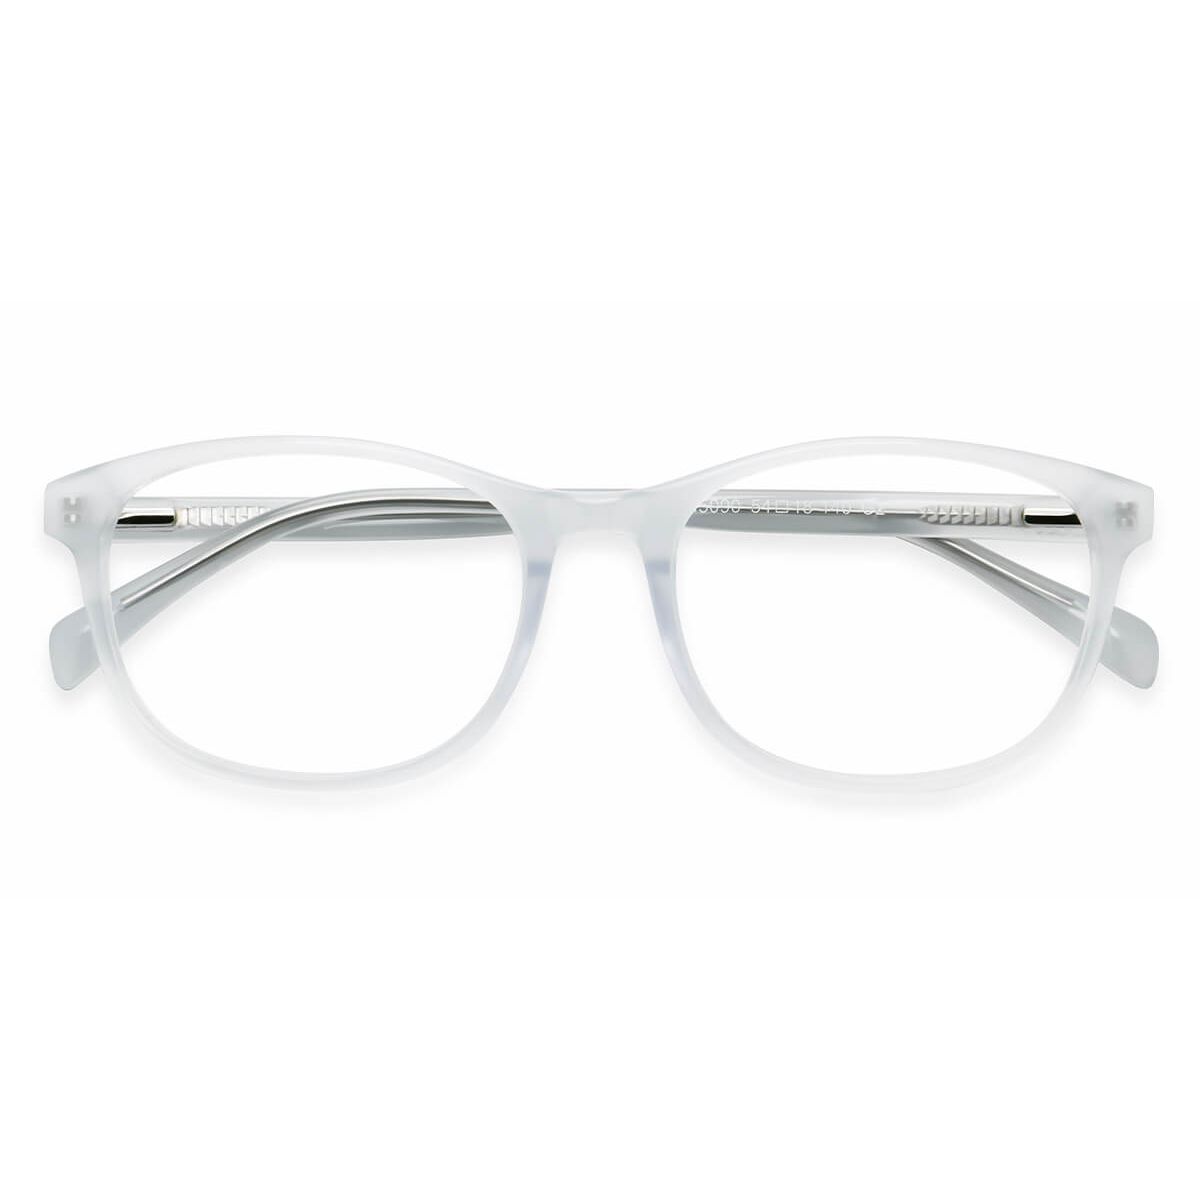 H5090 Oval White Eyeglasses Frames | Leoptique